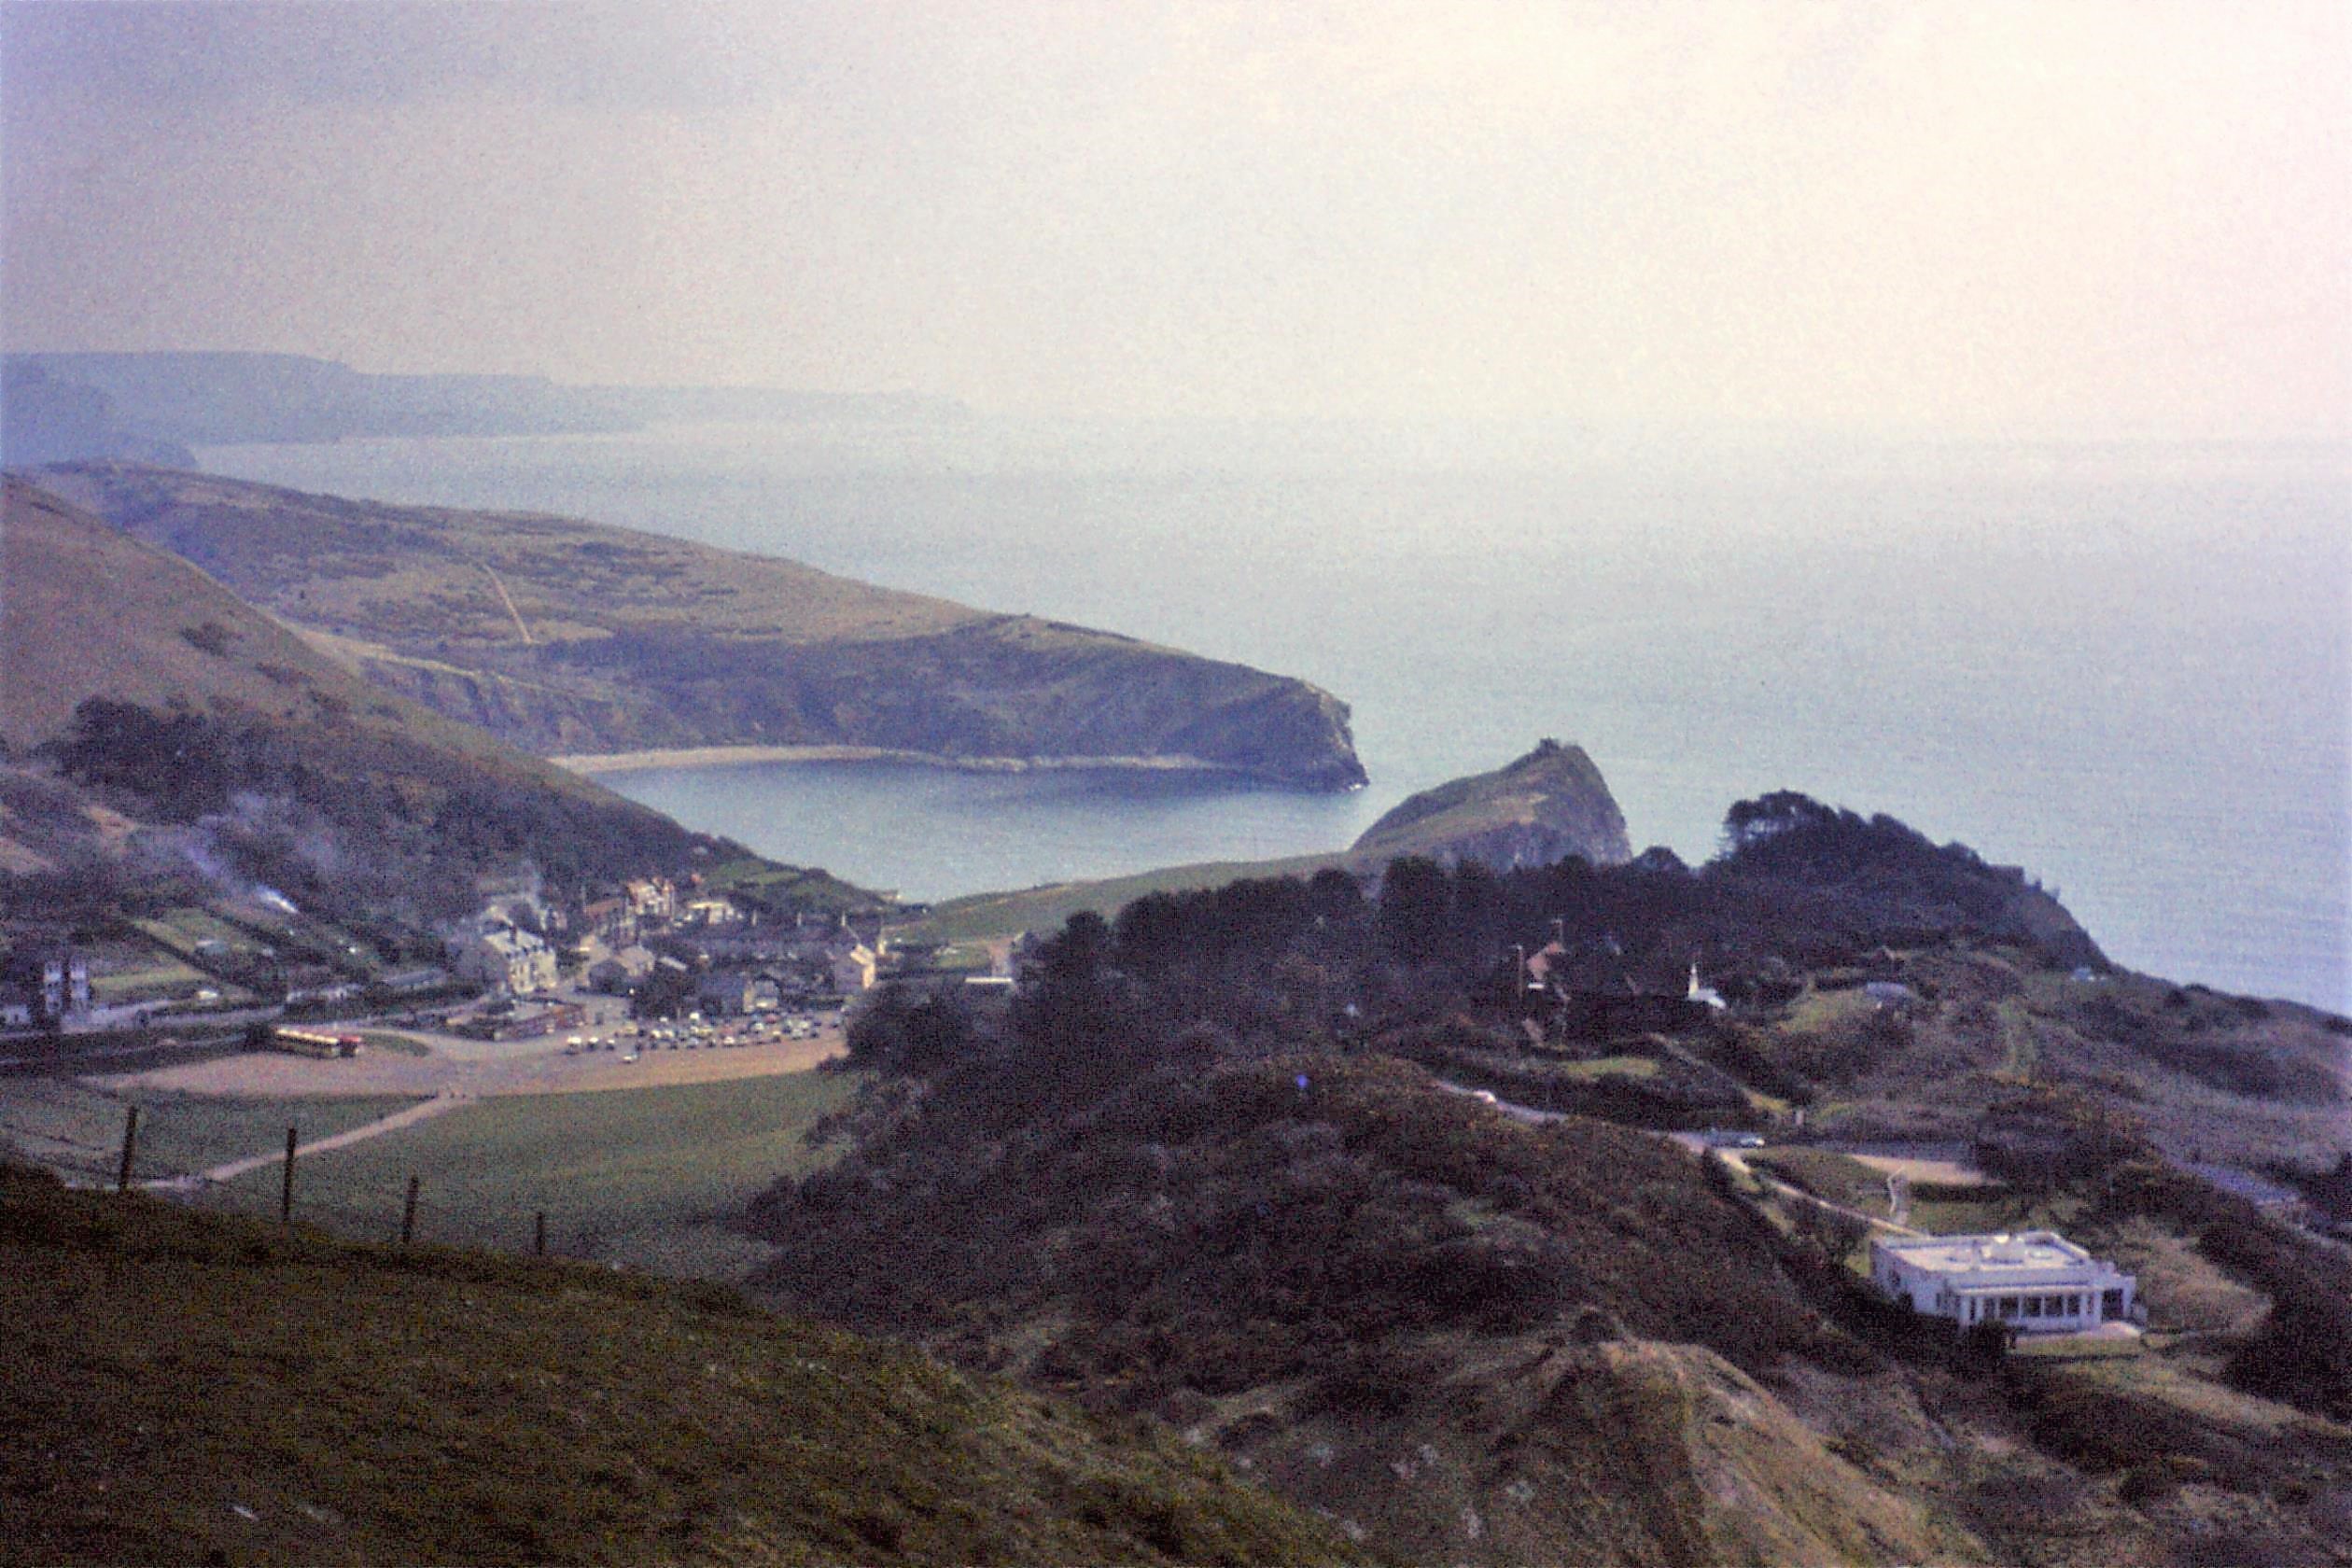 1975.04.06 Dorset1. Lulworth Cove